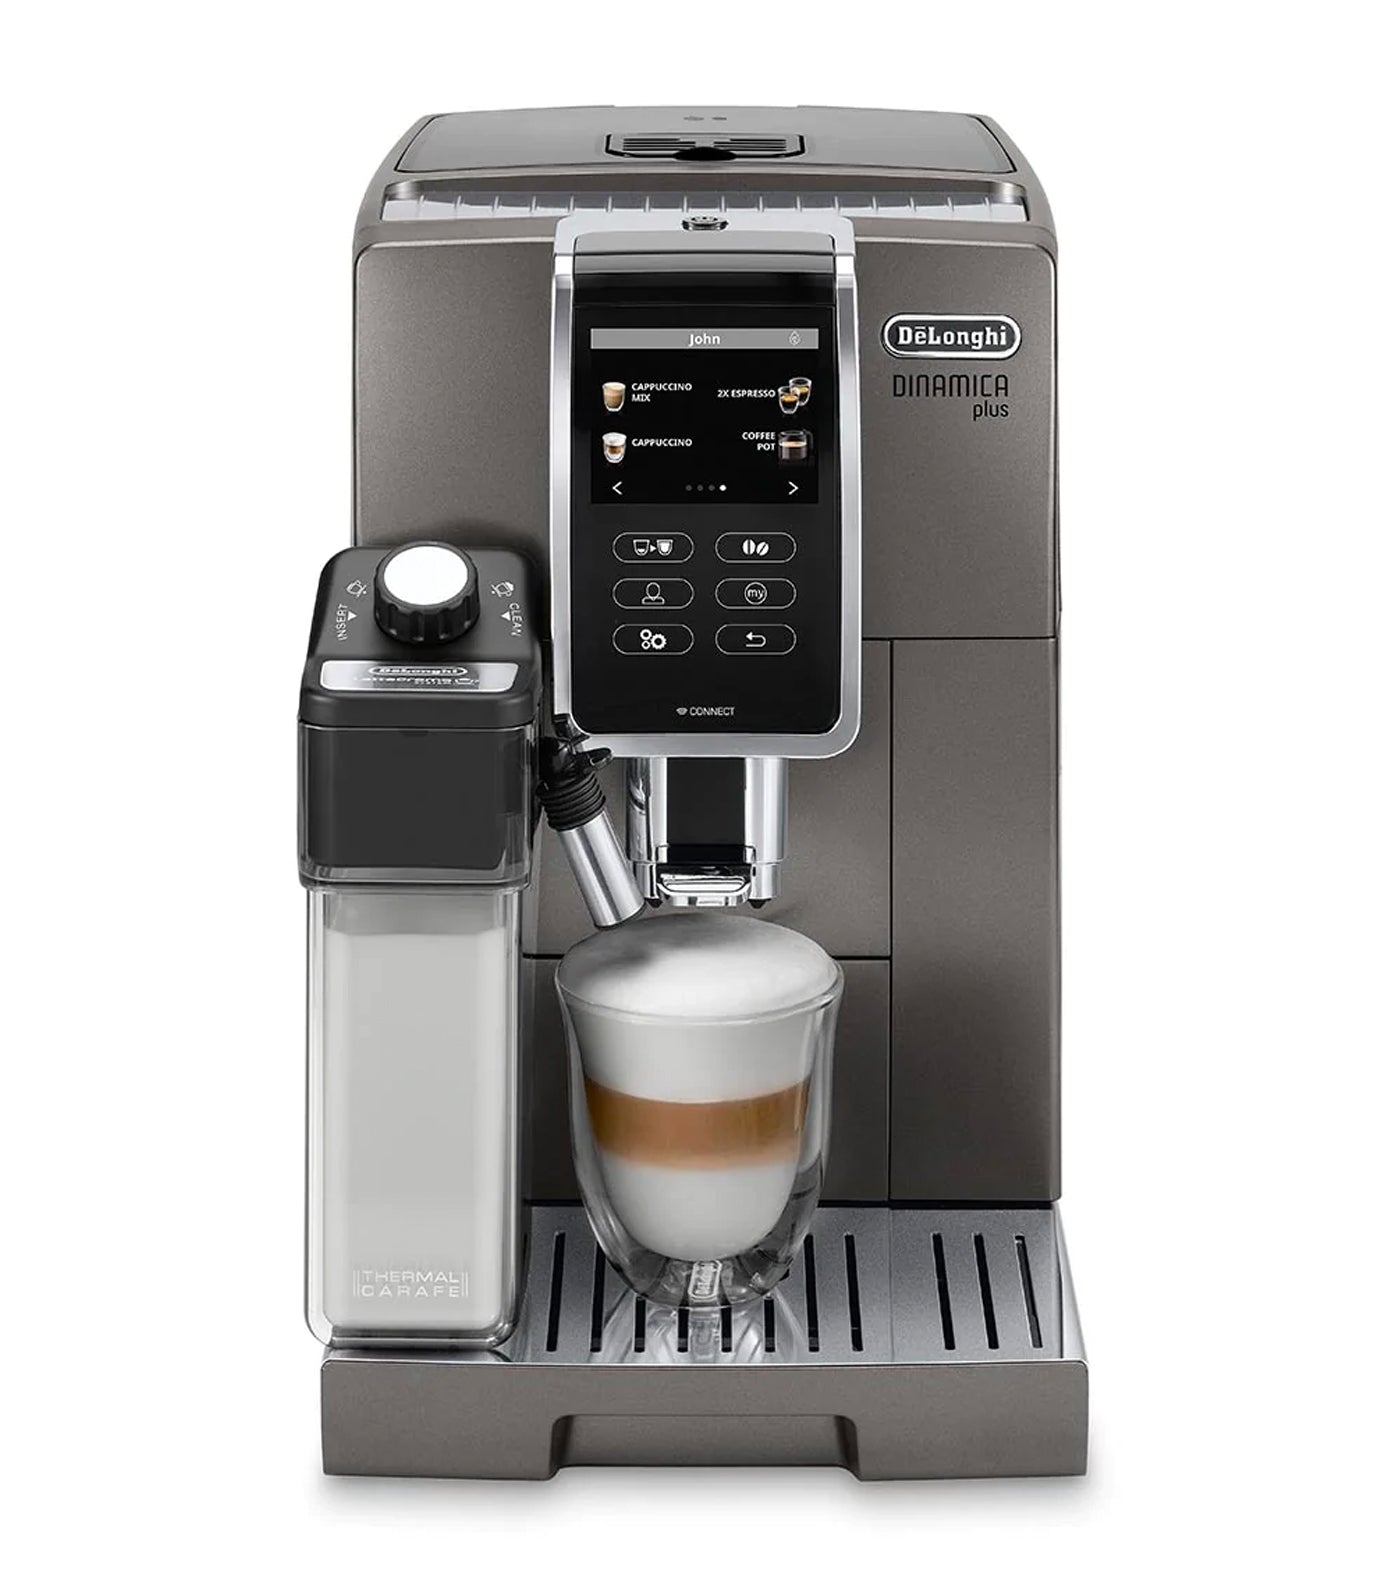 De'Longhi Dinamica Plus Coffee Machine  - Platinum